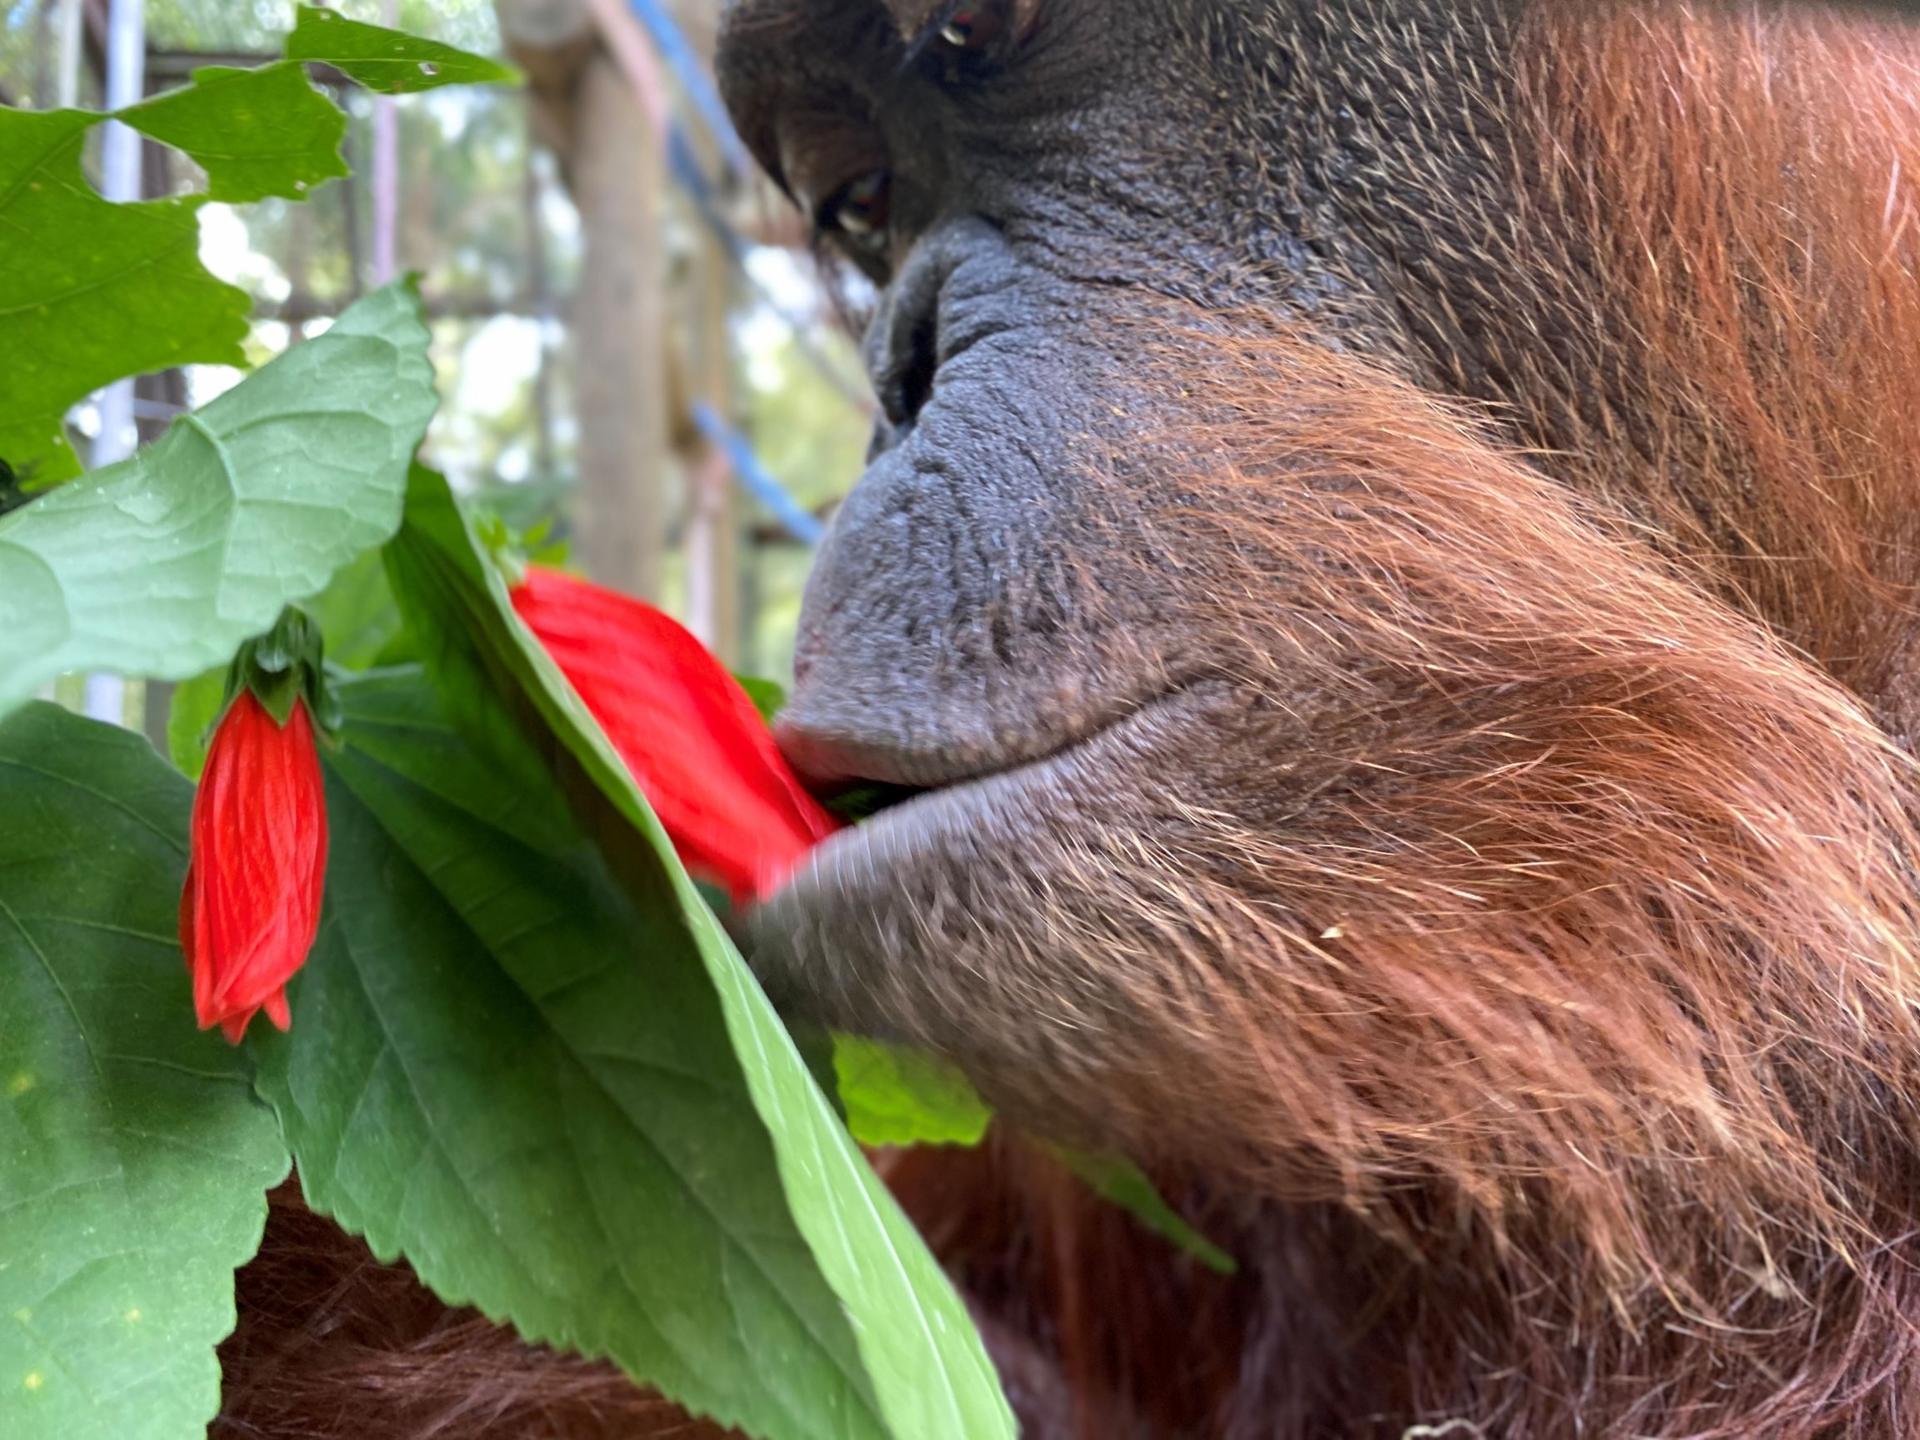 Sandra the orangutan tastes a wild hibiscus, Nov. 12, 2019.